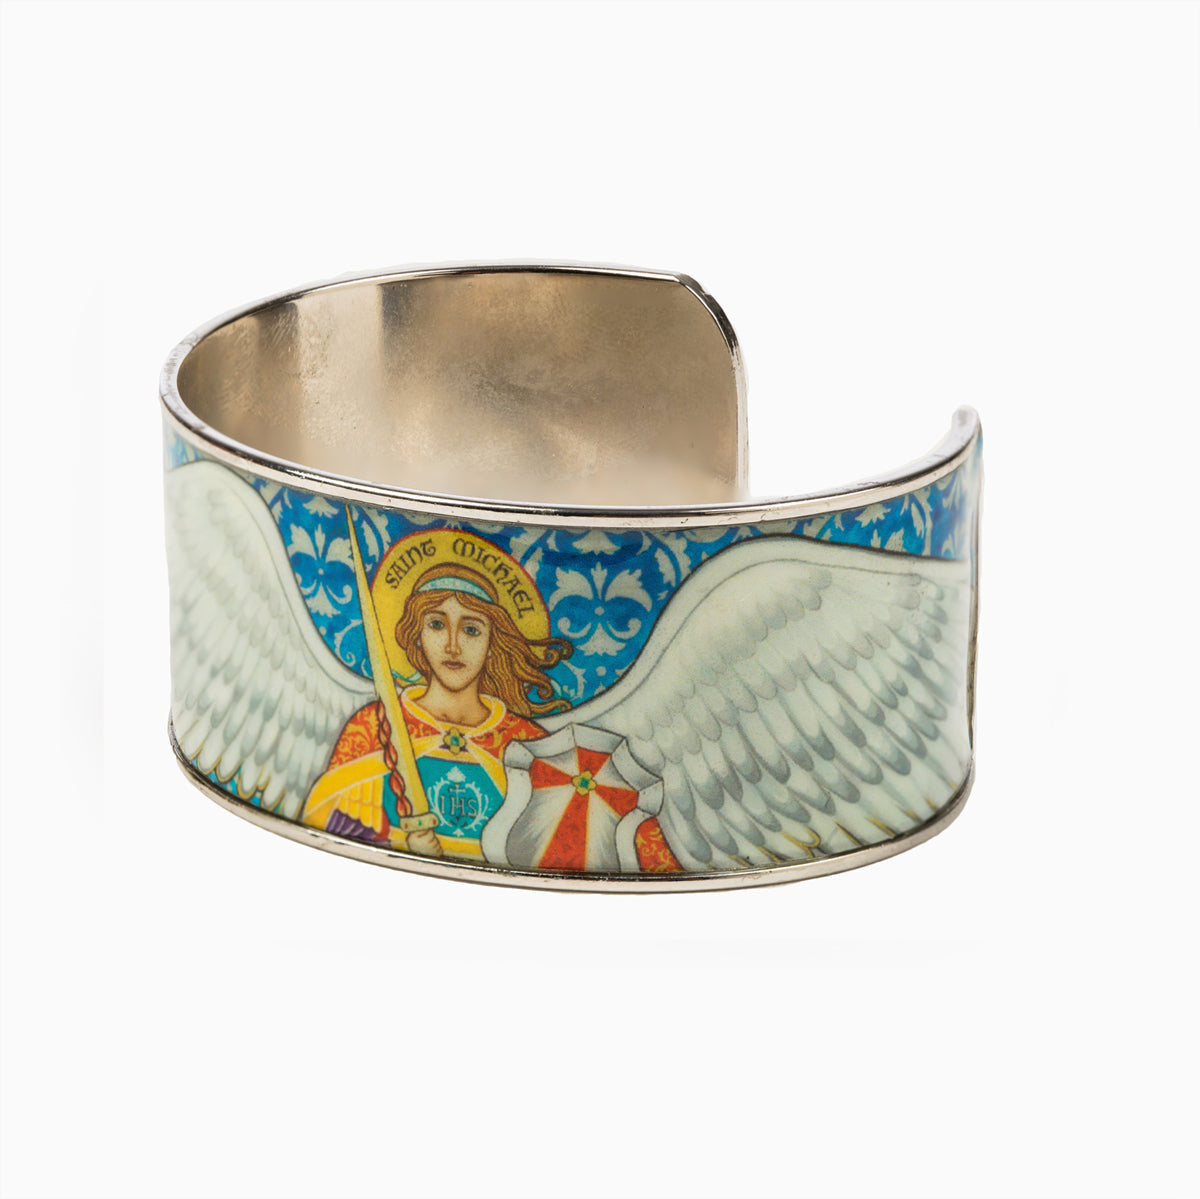 Archangel Michael Protection Cuff Bracelet by My Saint My Hero